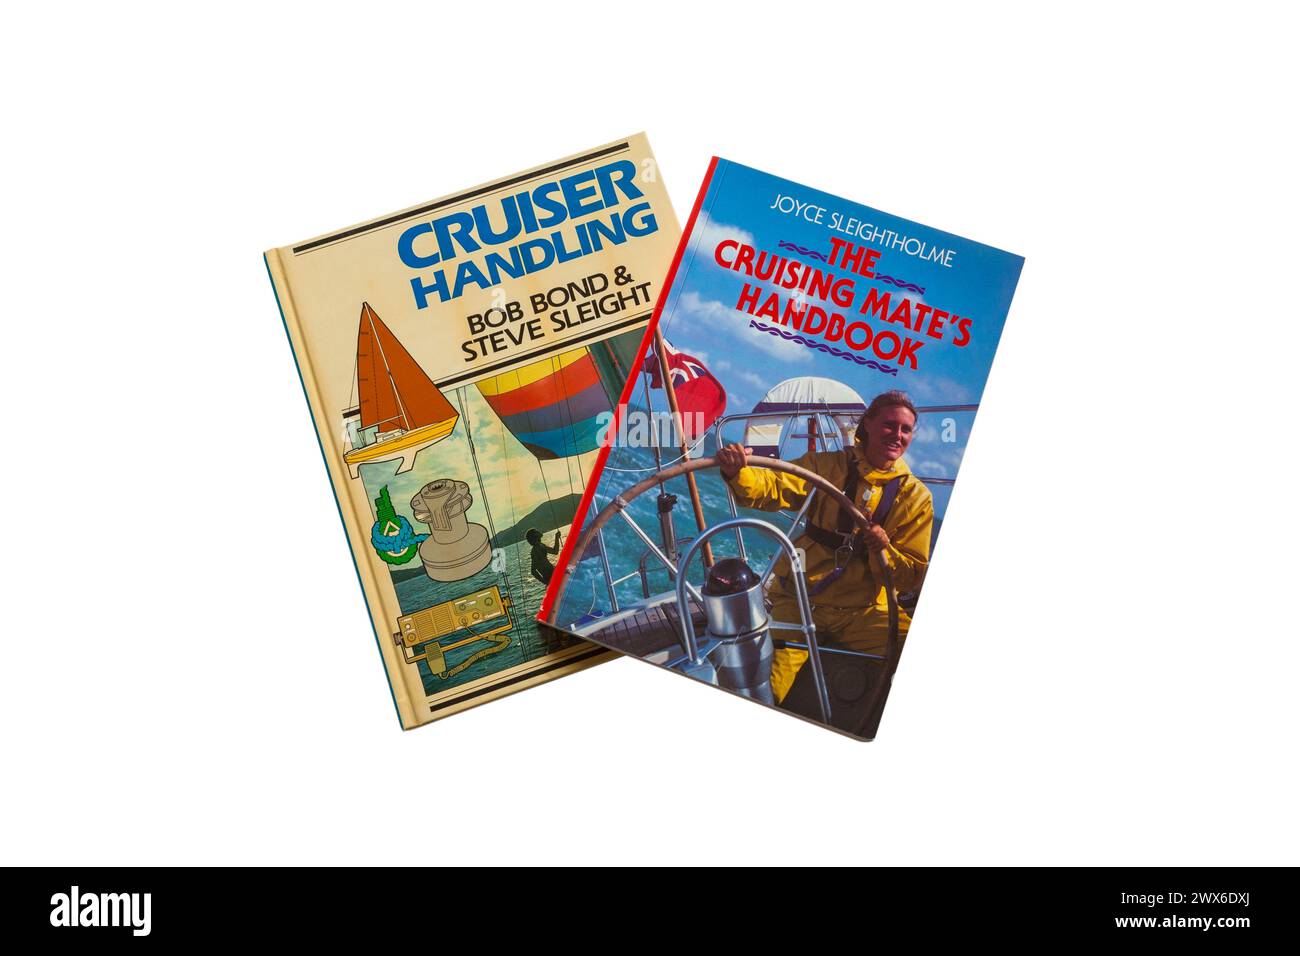 Books for Sailors - The Cruising Mate's Handbook and Cruiser Handling isoliert auf weißem Hintergrund Stockfoto